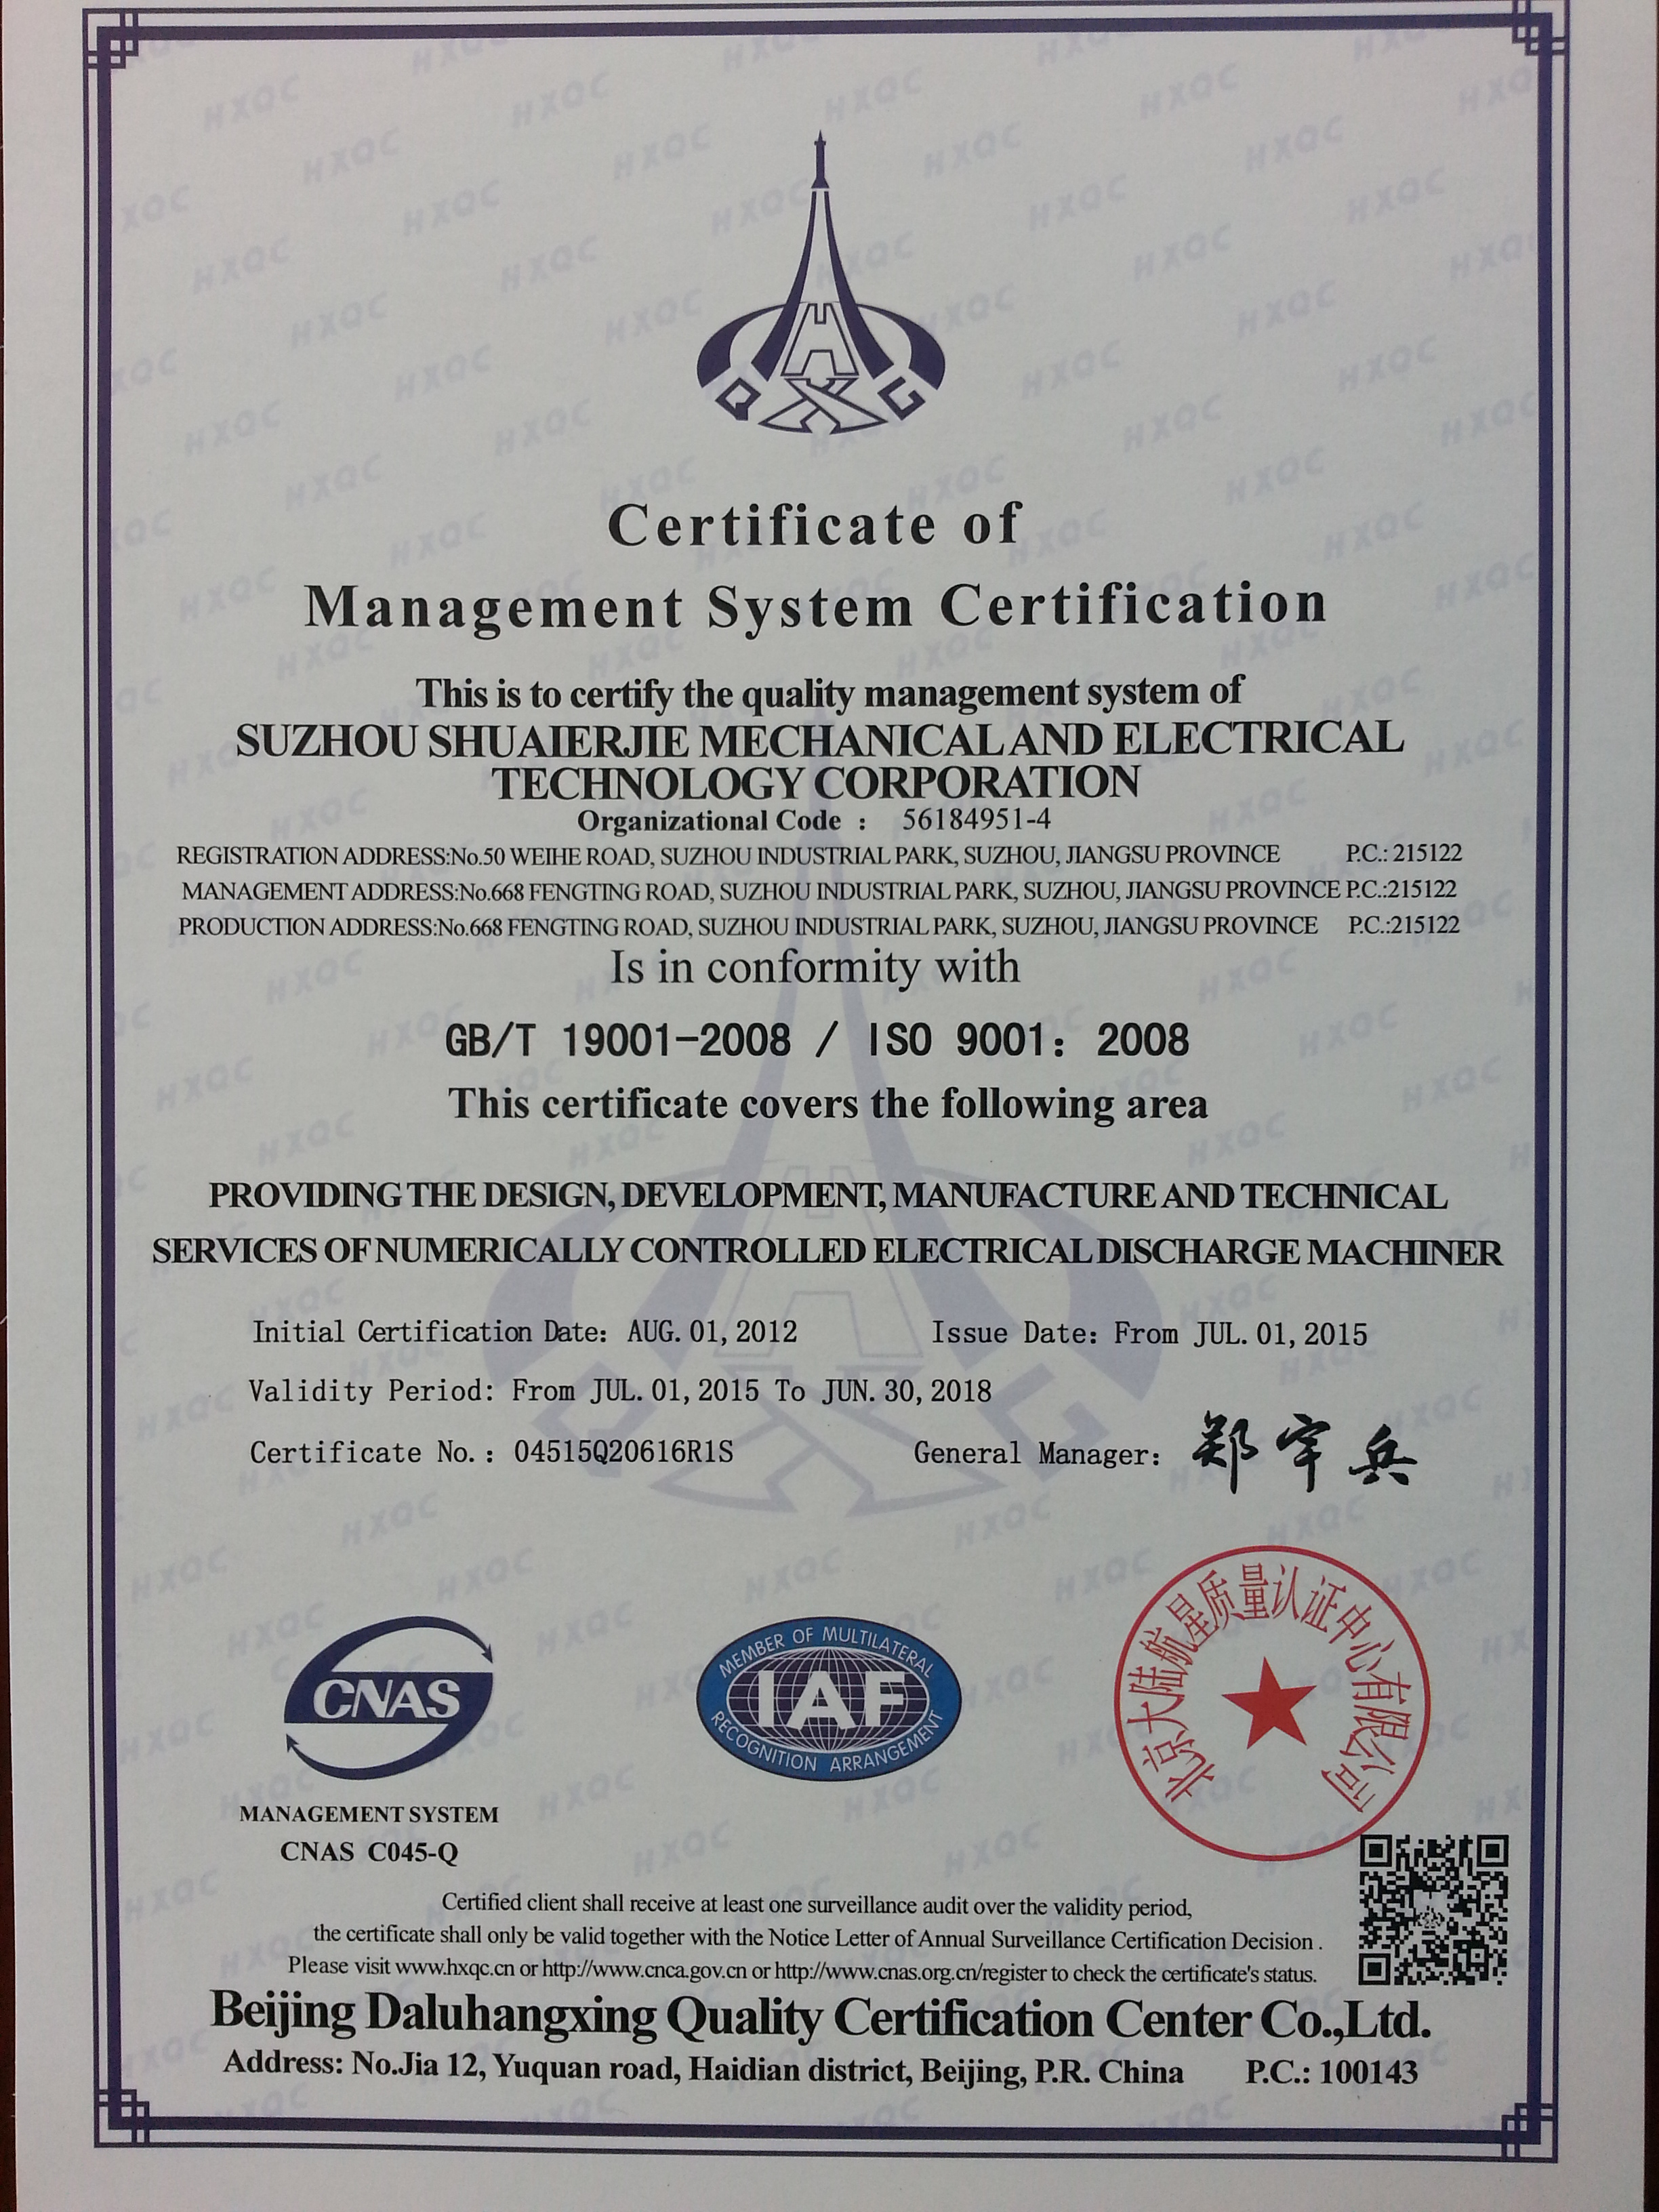 CertificateofConformityofManagementSystemCertification